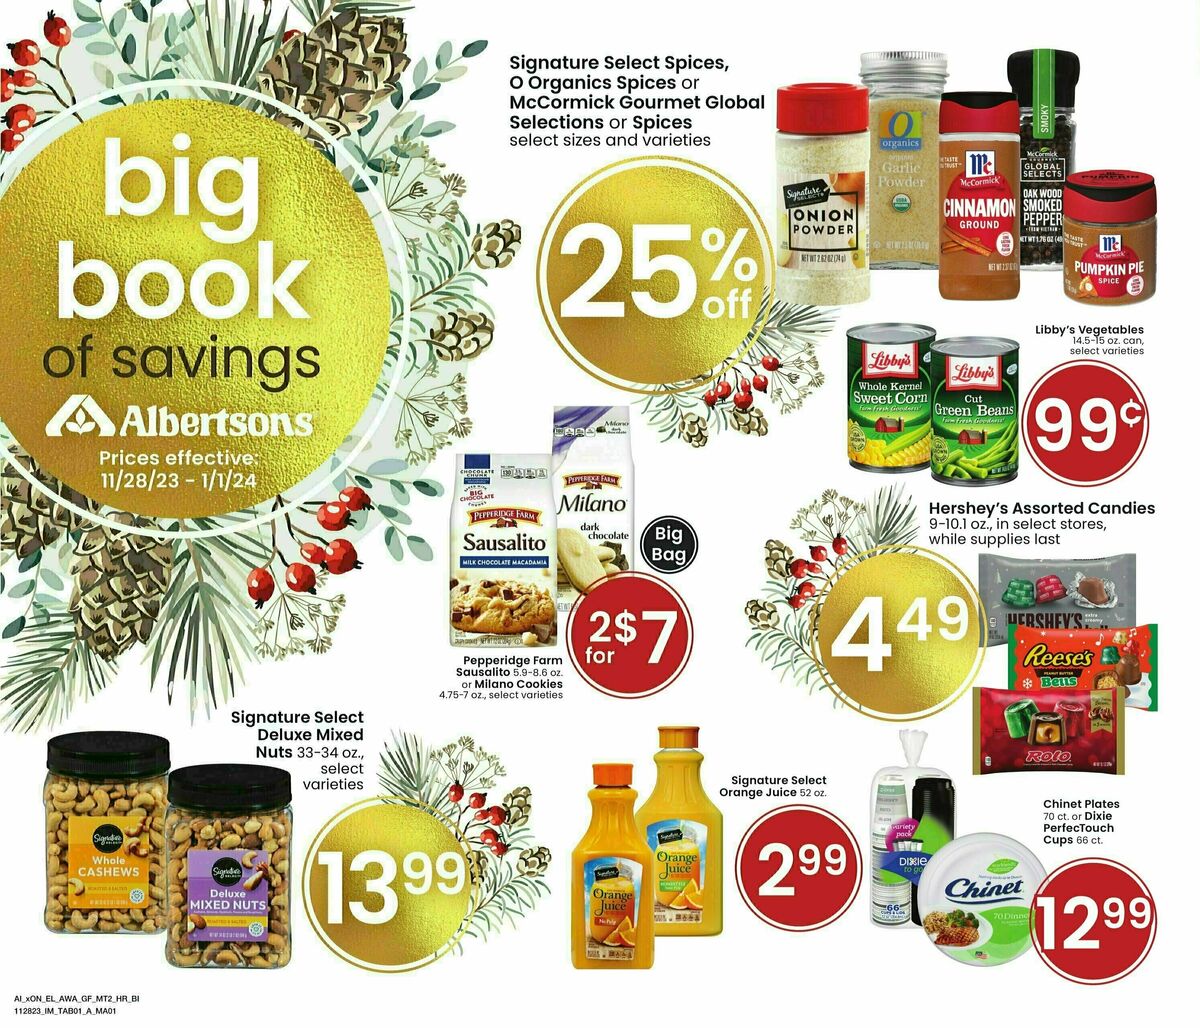 Albertsons Big Book of Savings Weekly Ad from November 28